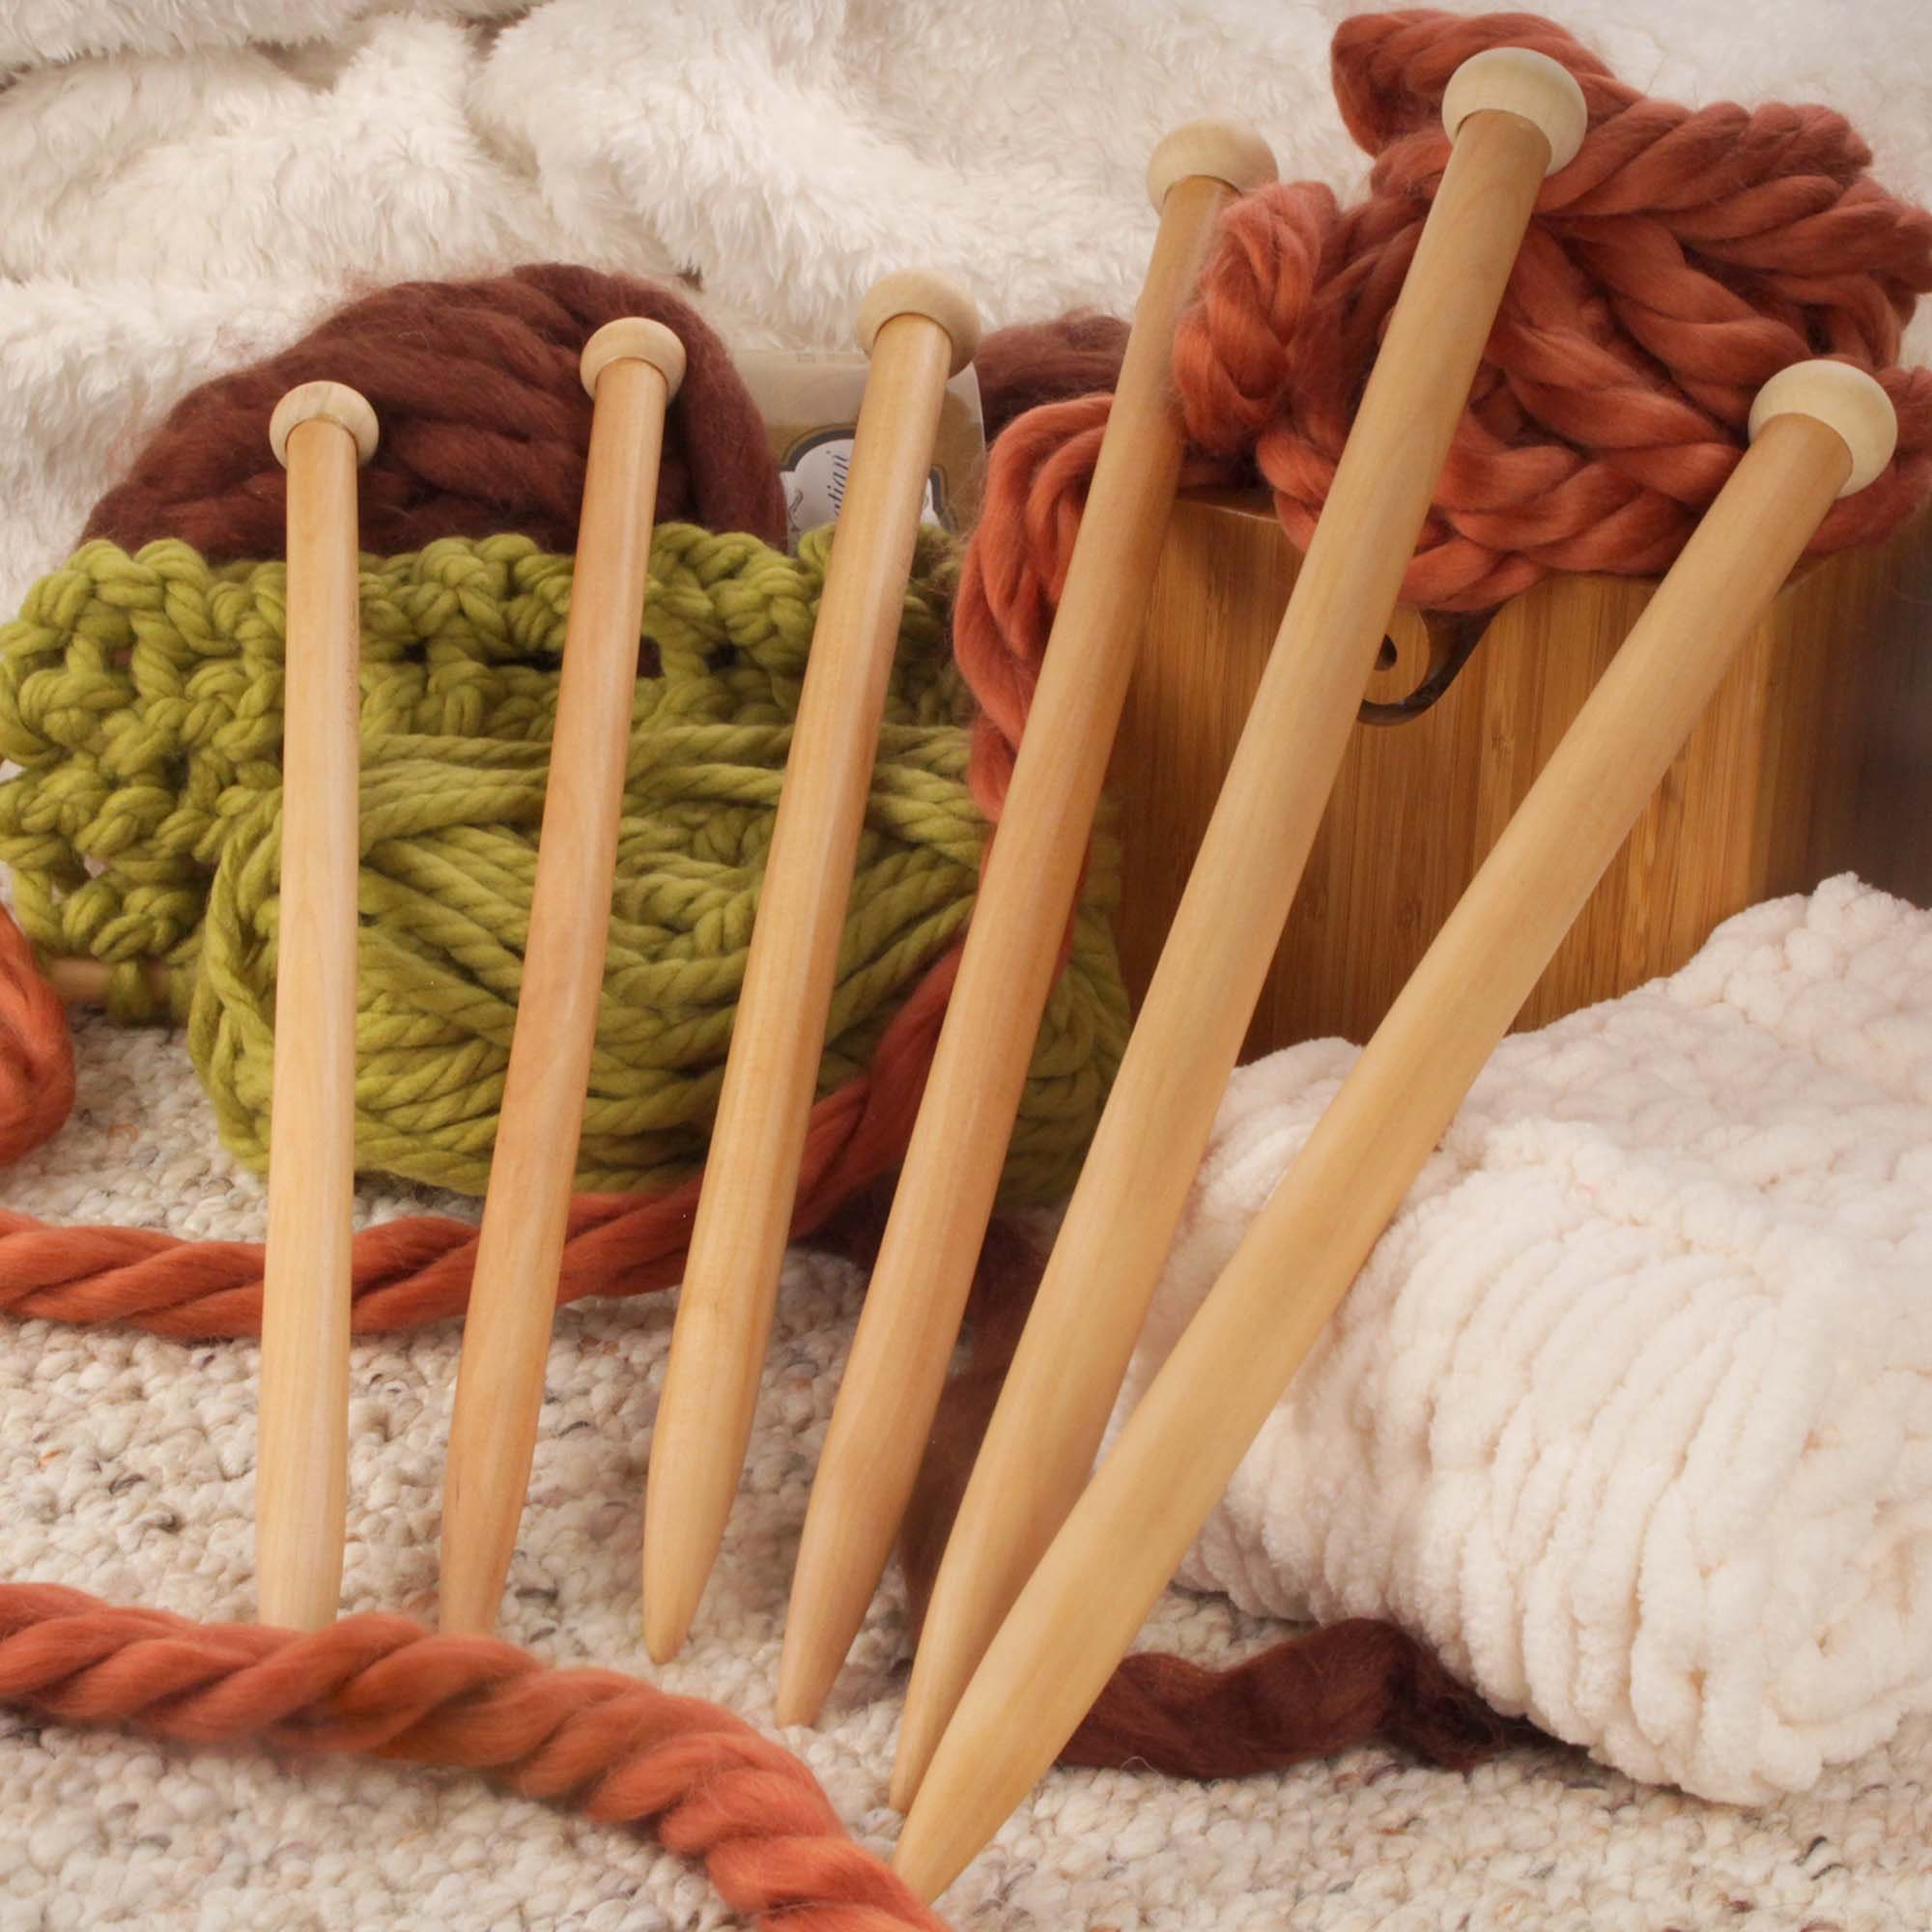 JubileeYarn Jumbo Bamboo Knitting Needles - US 50 (25mm) - 16 long - 1 pair